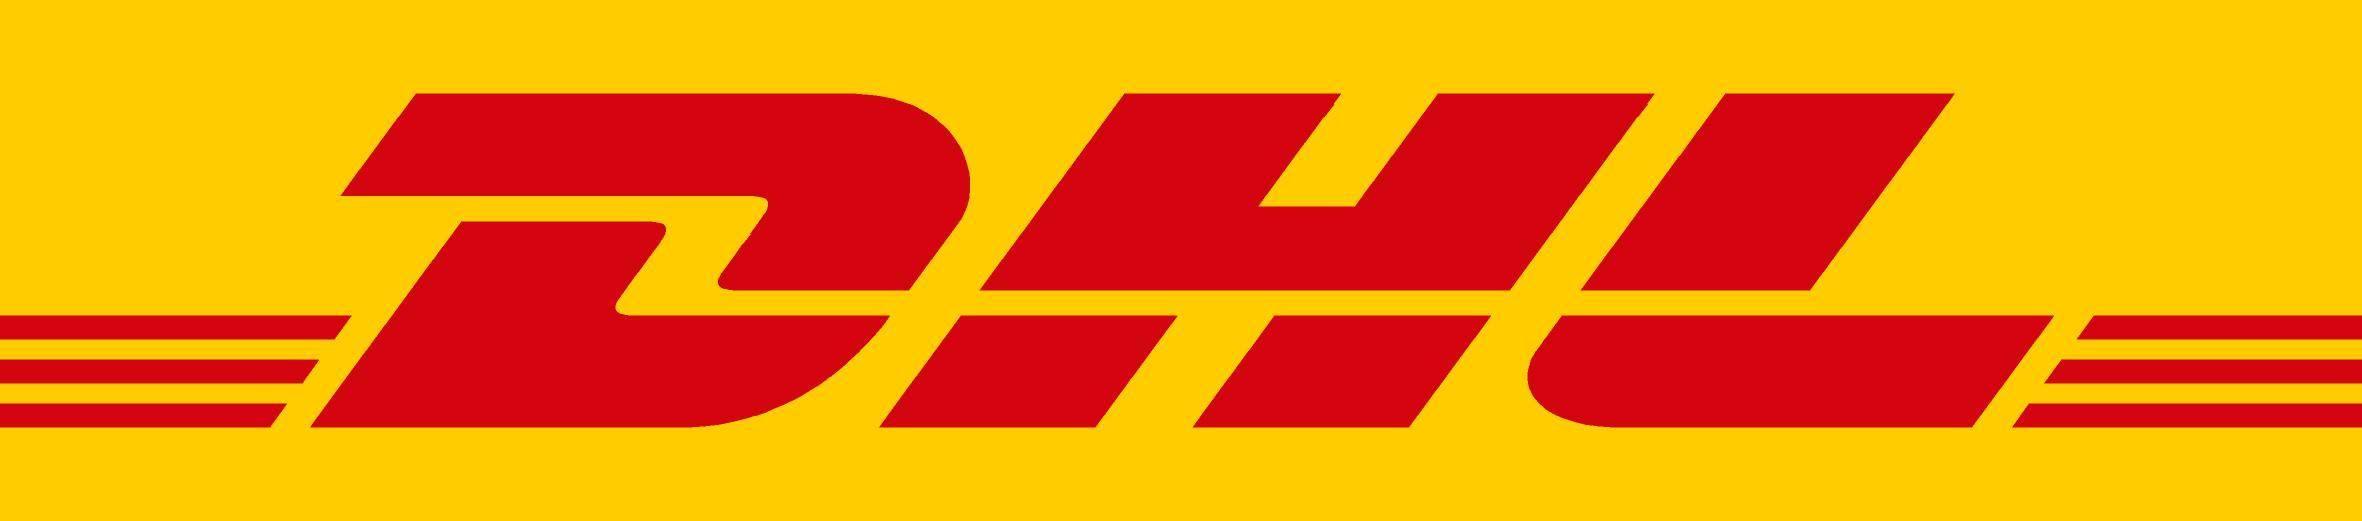 DHL Worldwide Express Logo - Open Pricer